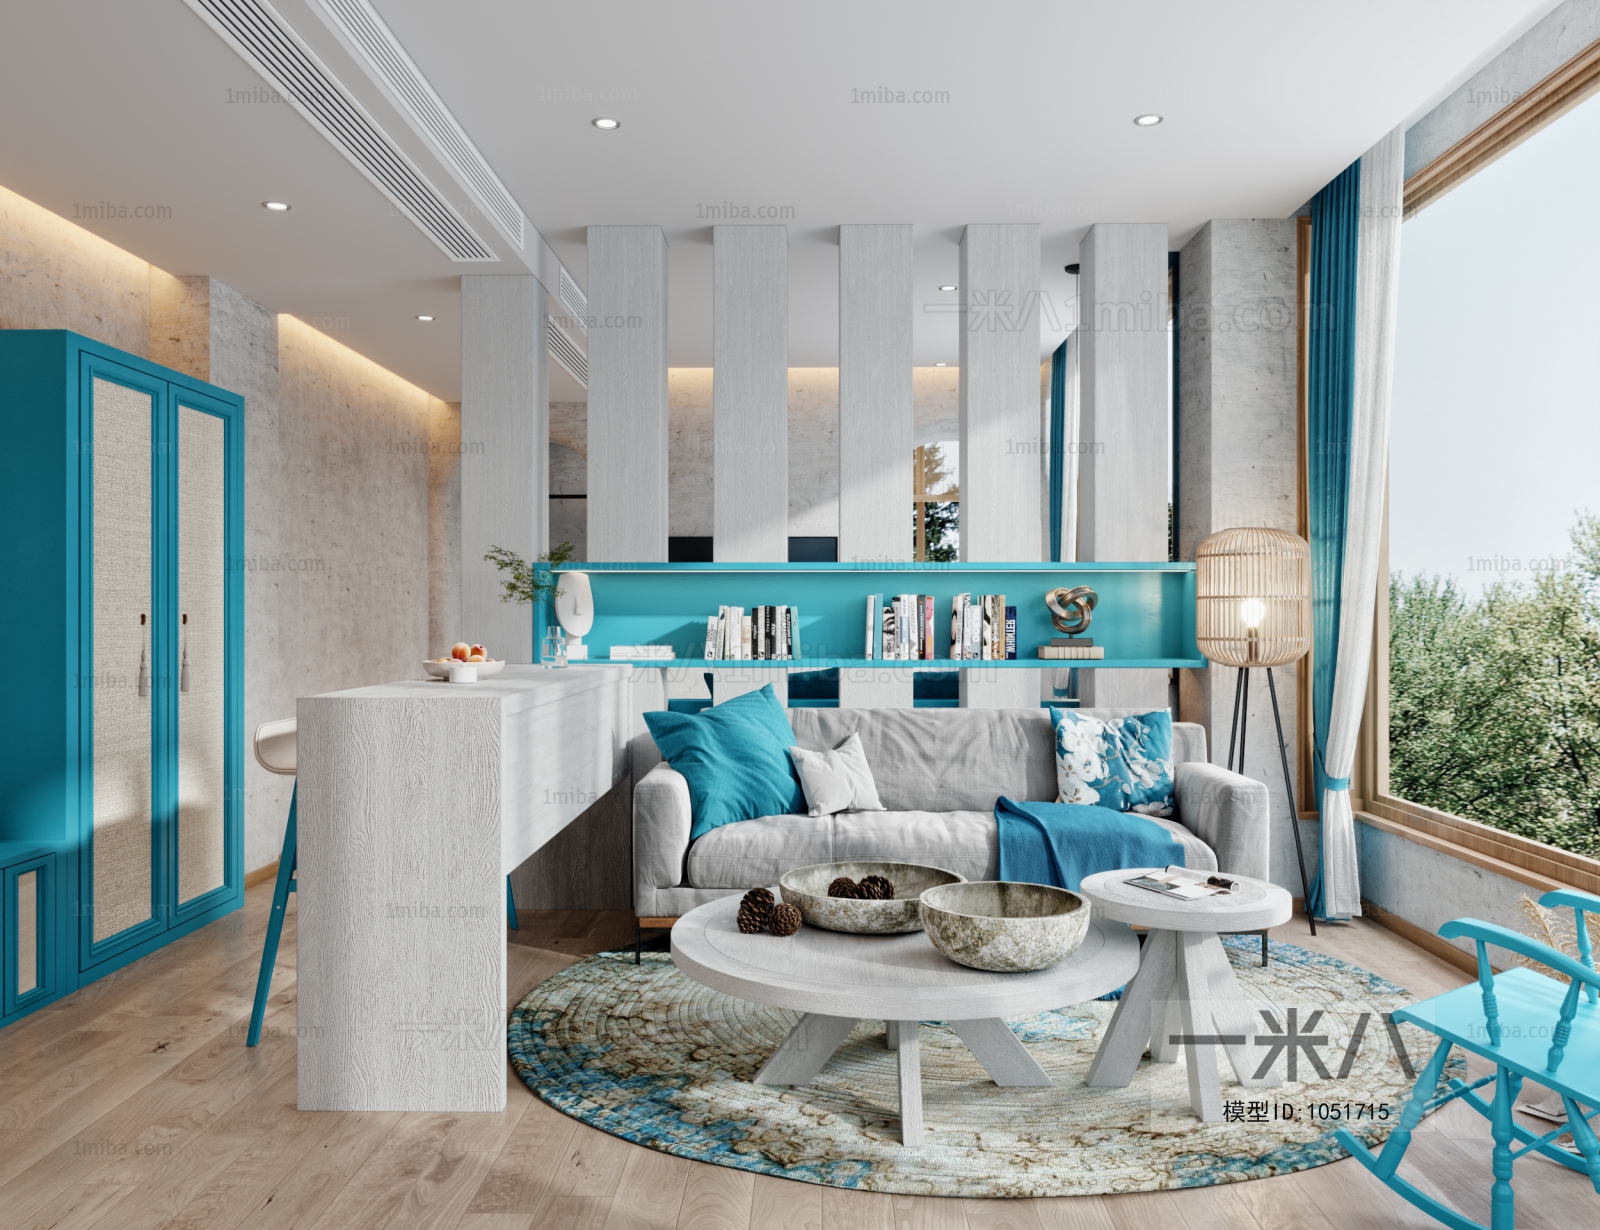 Mediterranean Style Guest Room